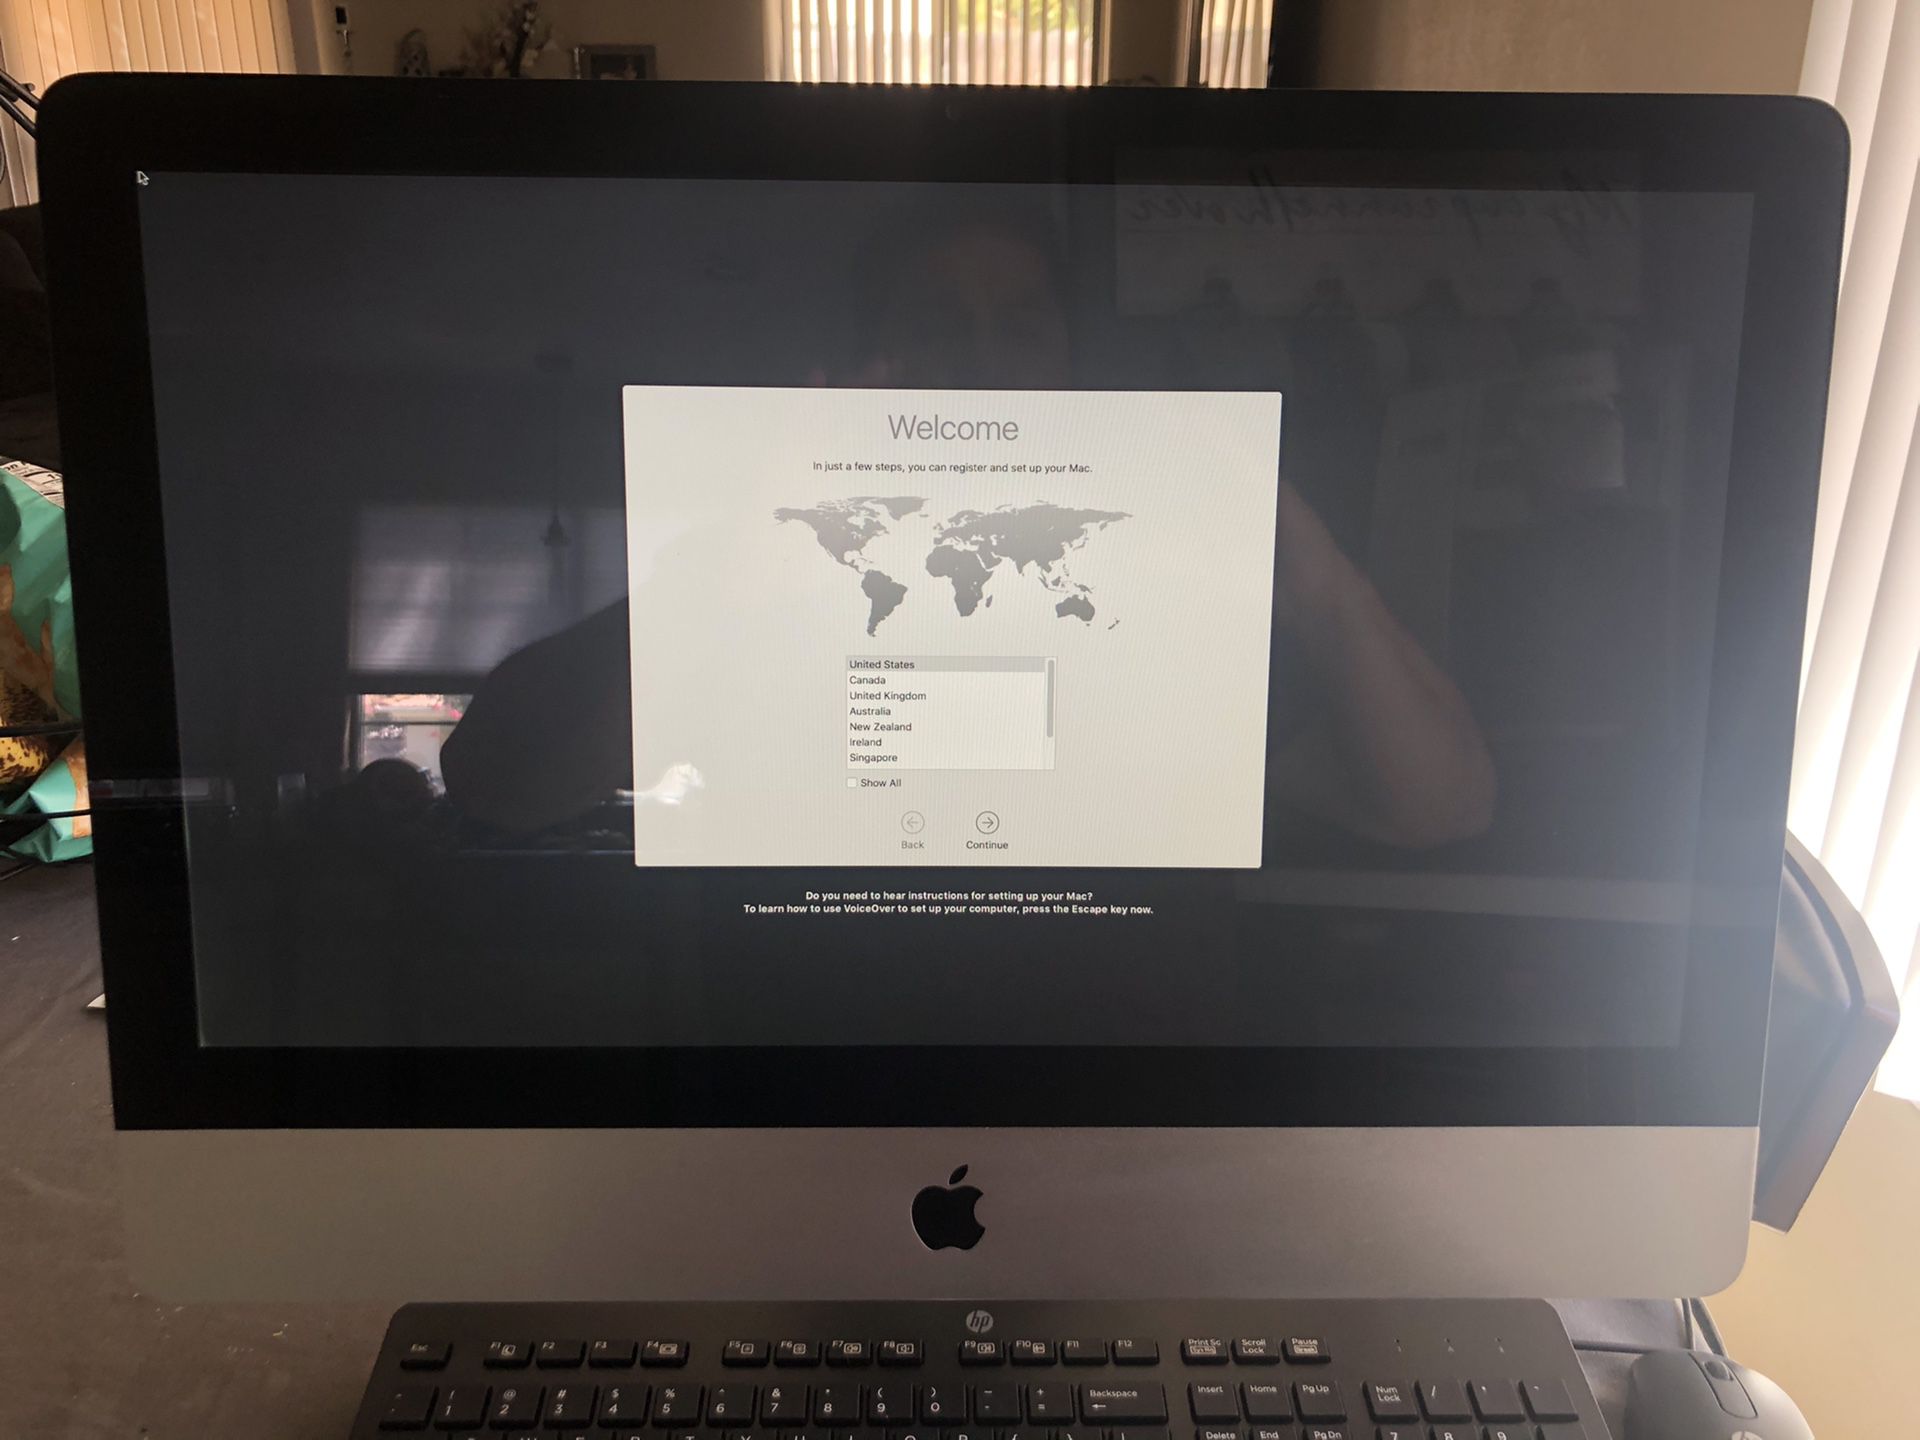 iMac 21.5 inch (mid 2011)